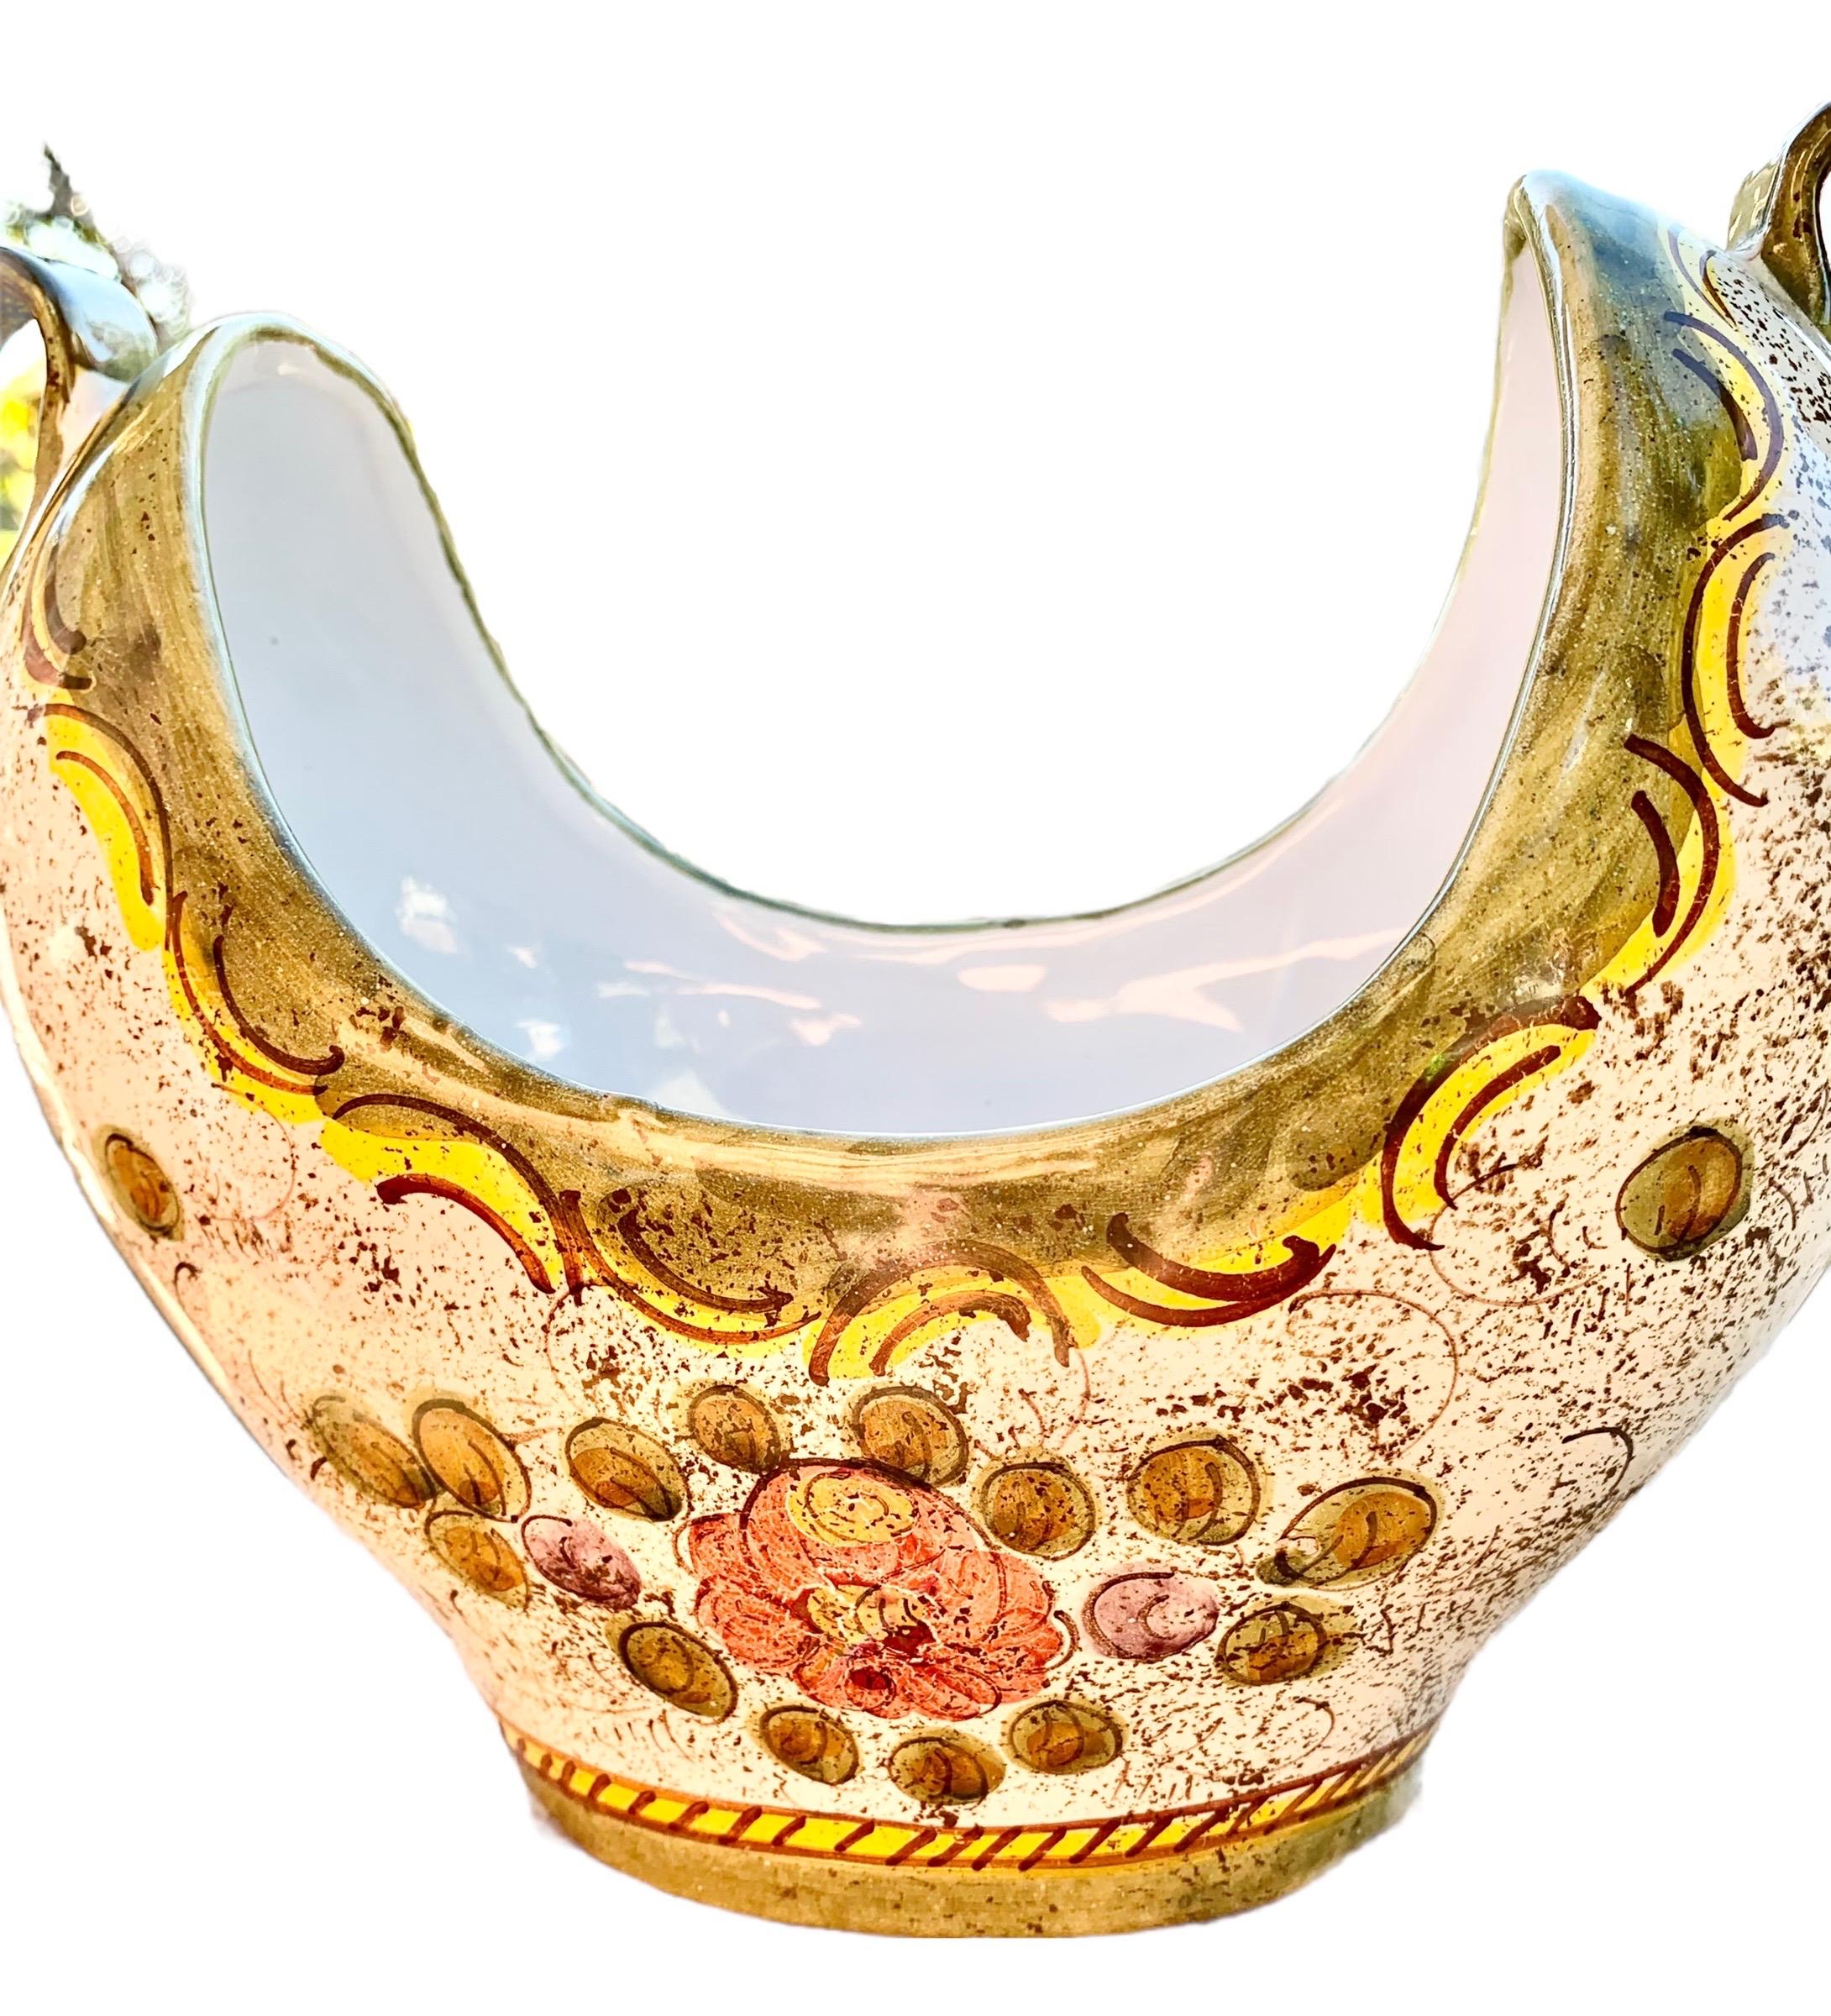 A unique, rare early 20th century Italian Majolica boat shaped bowl created in the Deruta studio, Deruta, Italy. A rare and coveted example of the golden age of Italian Majolica,